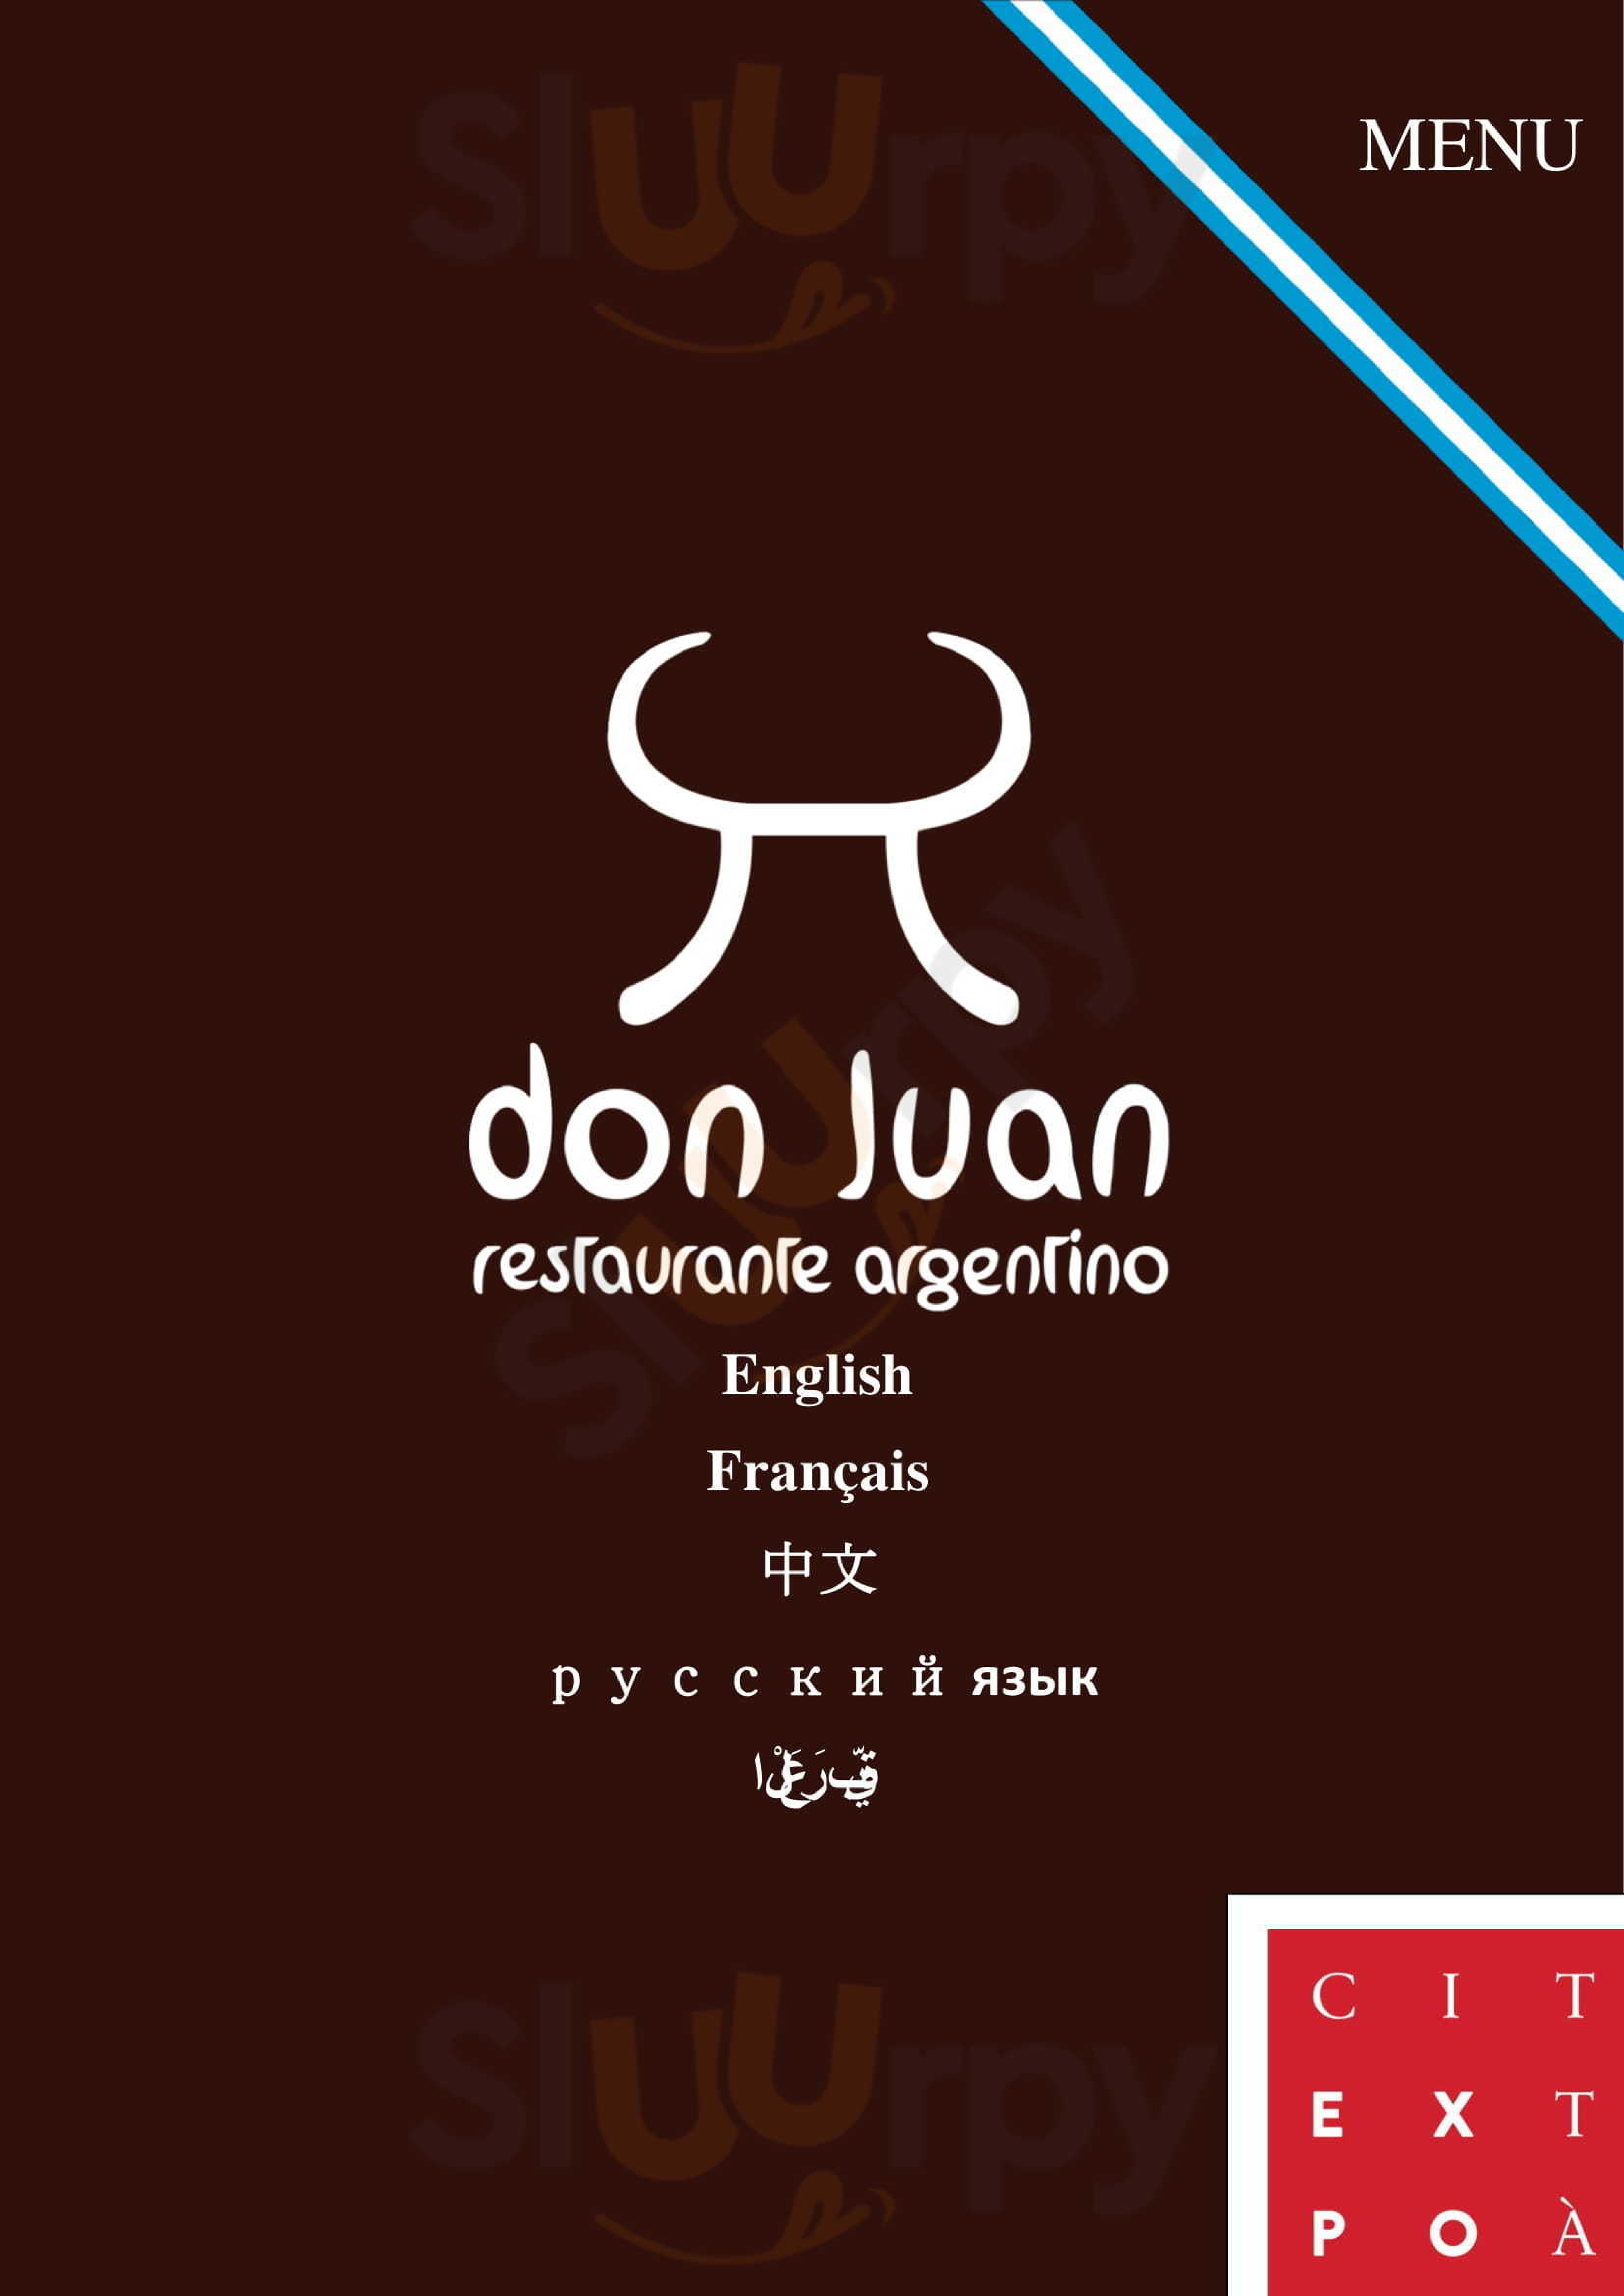 Don Juan Milano menù 1 pagina